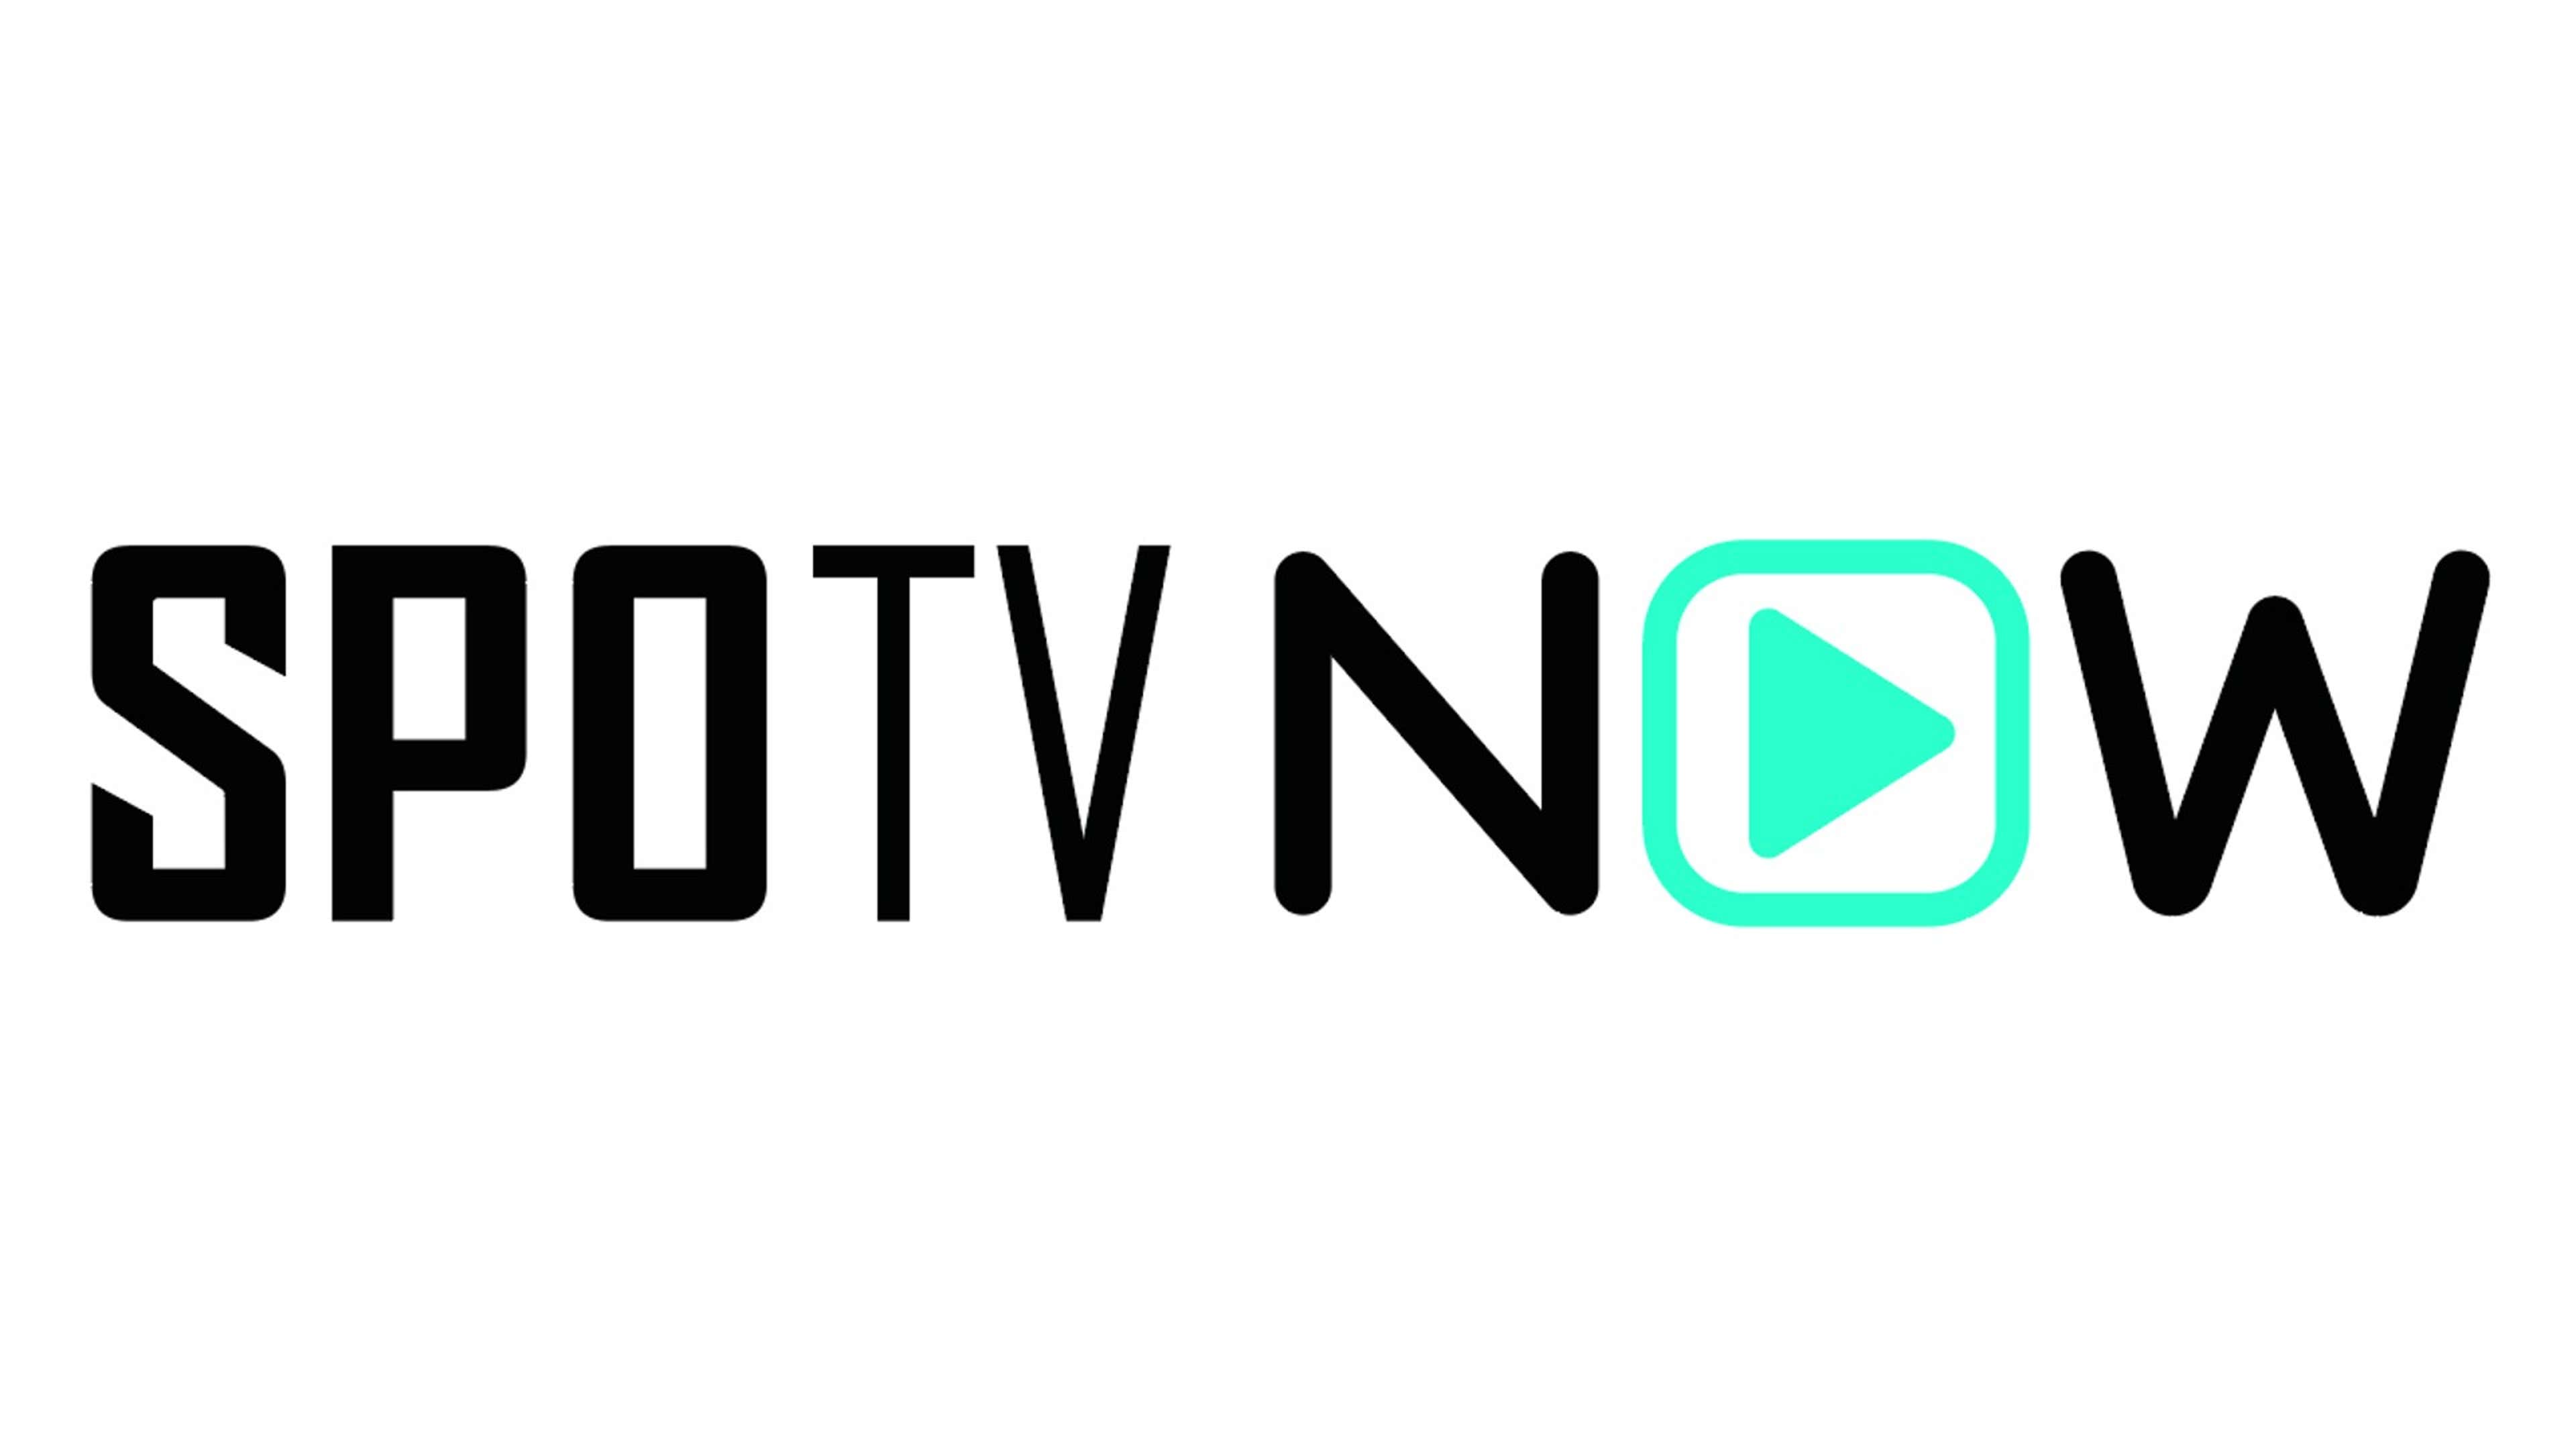 spotv now テレビで見る方法